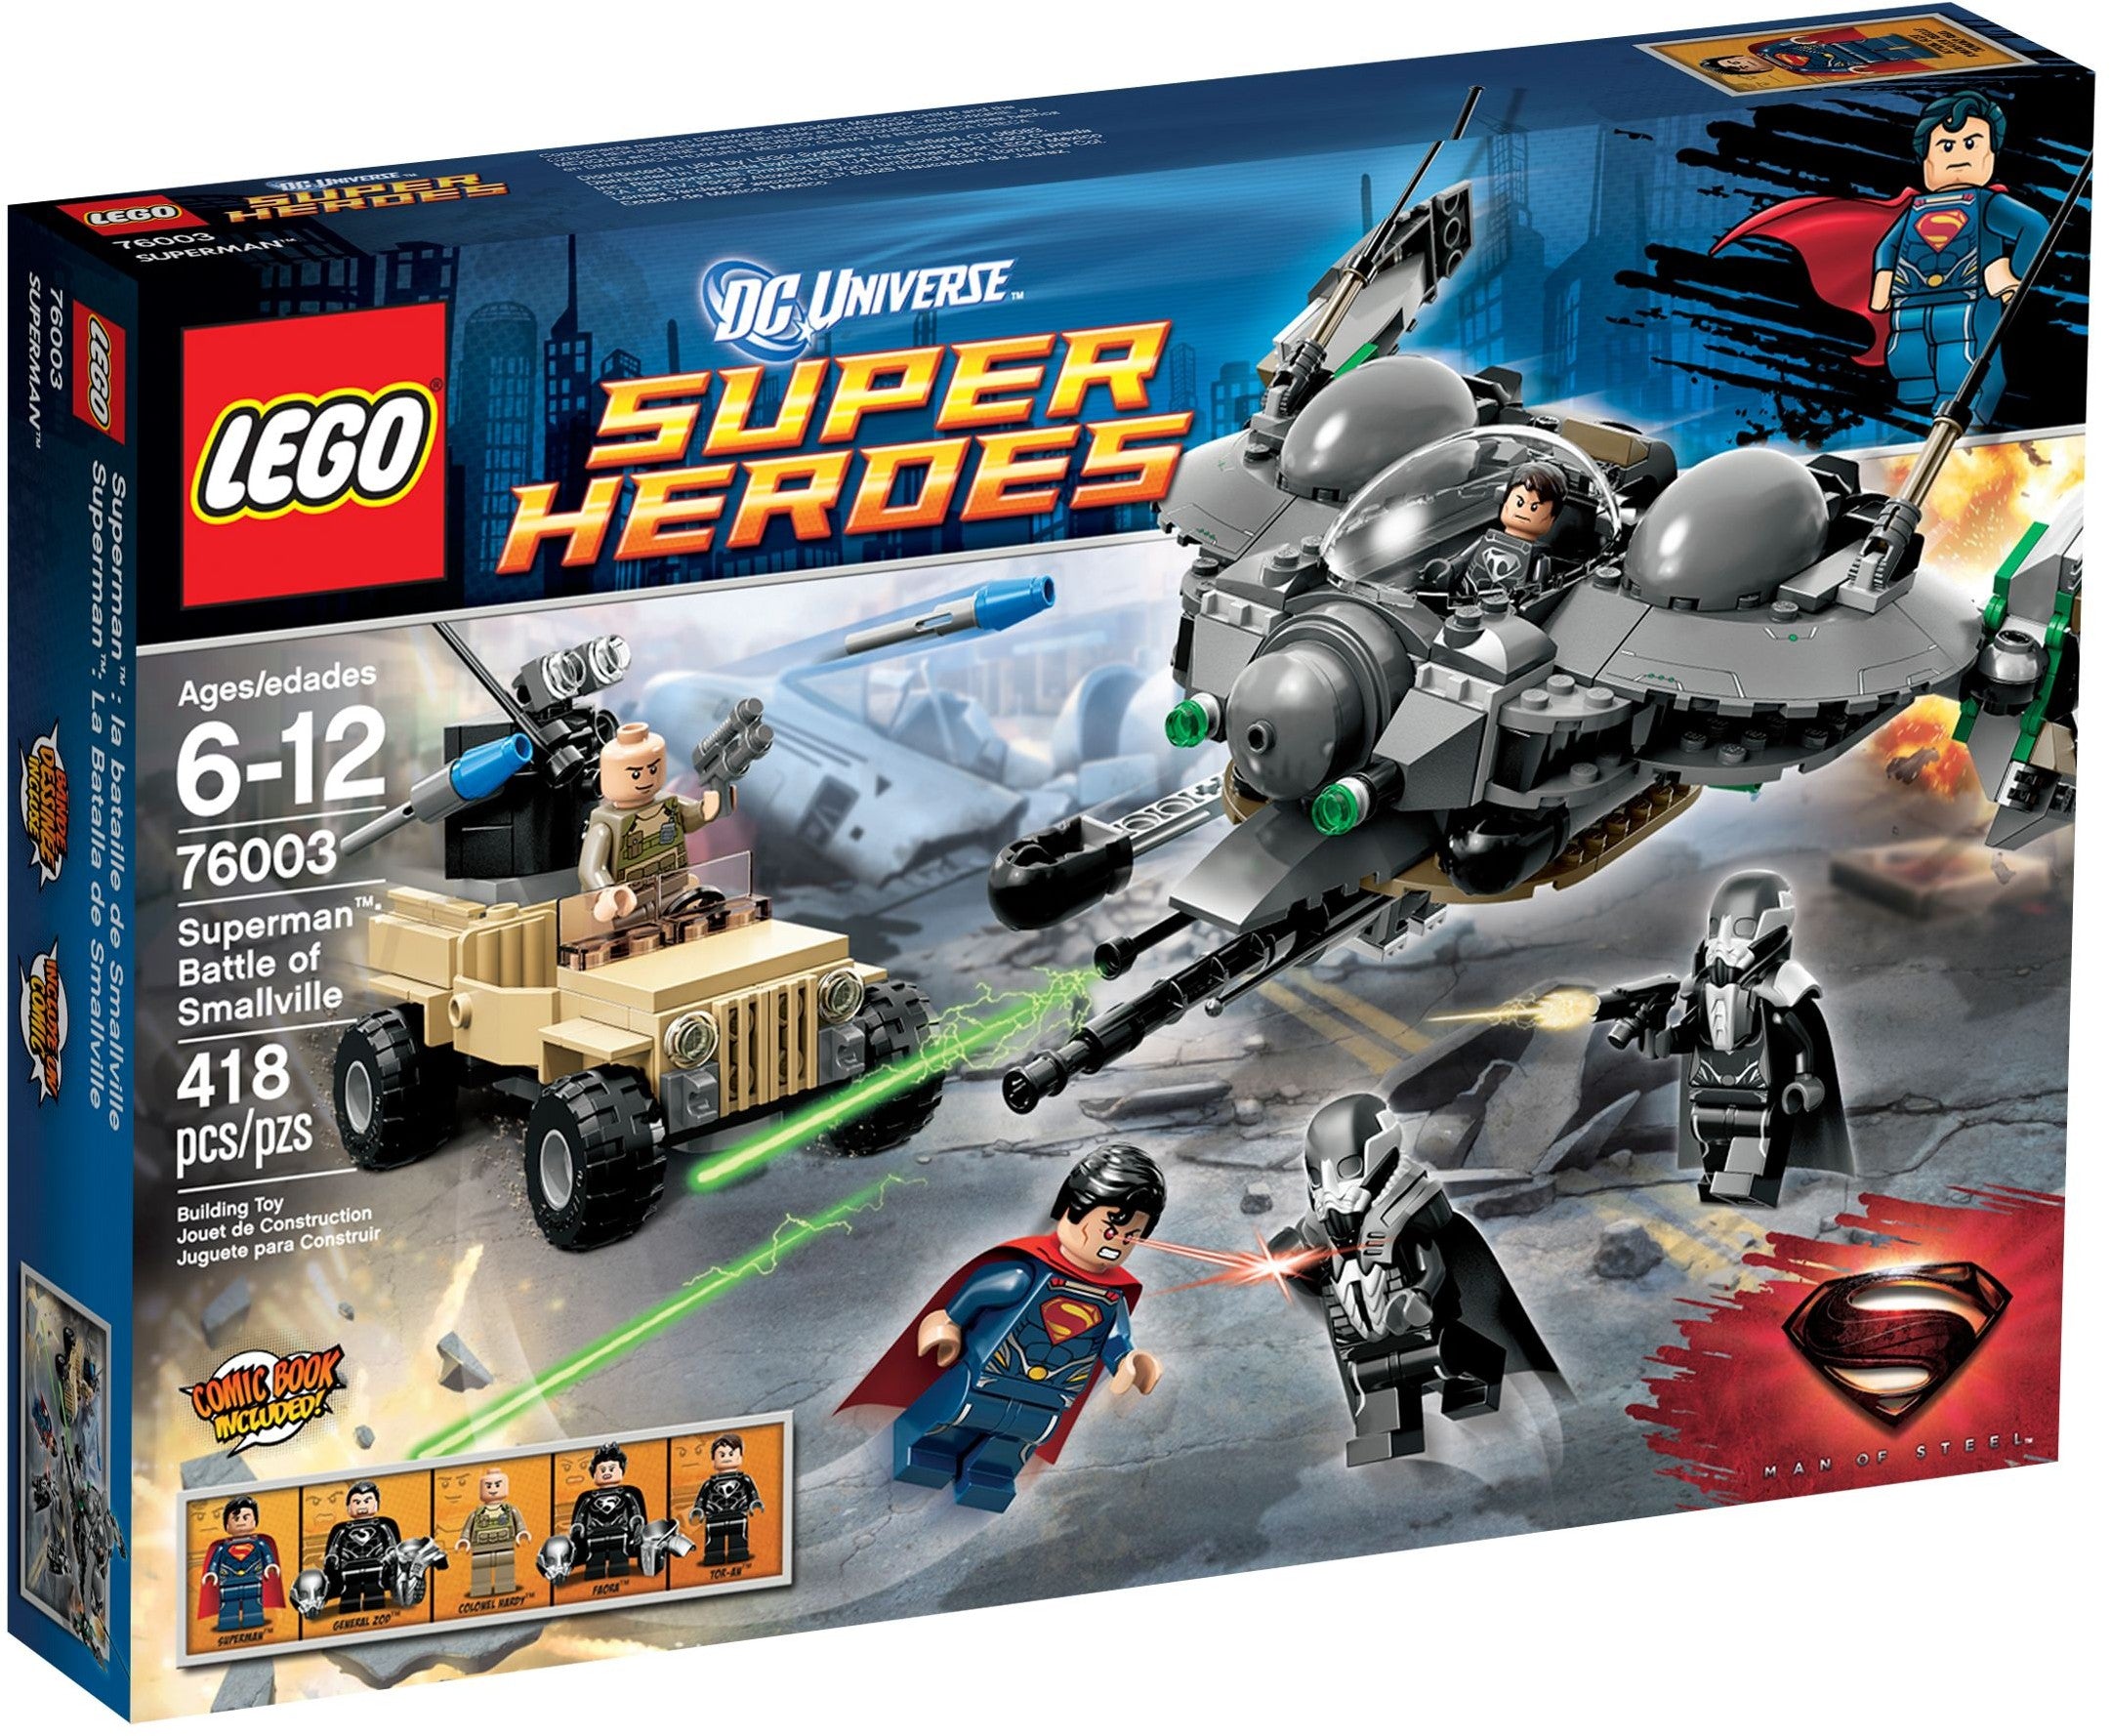 Lego Super Heroes 76003 - Superman: Battle of Smallville